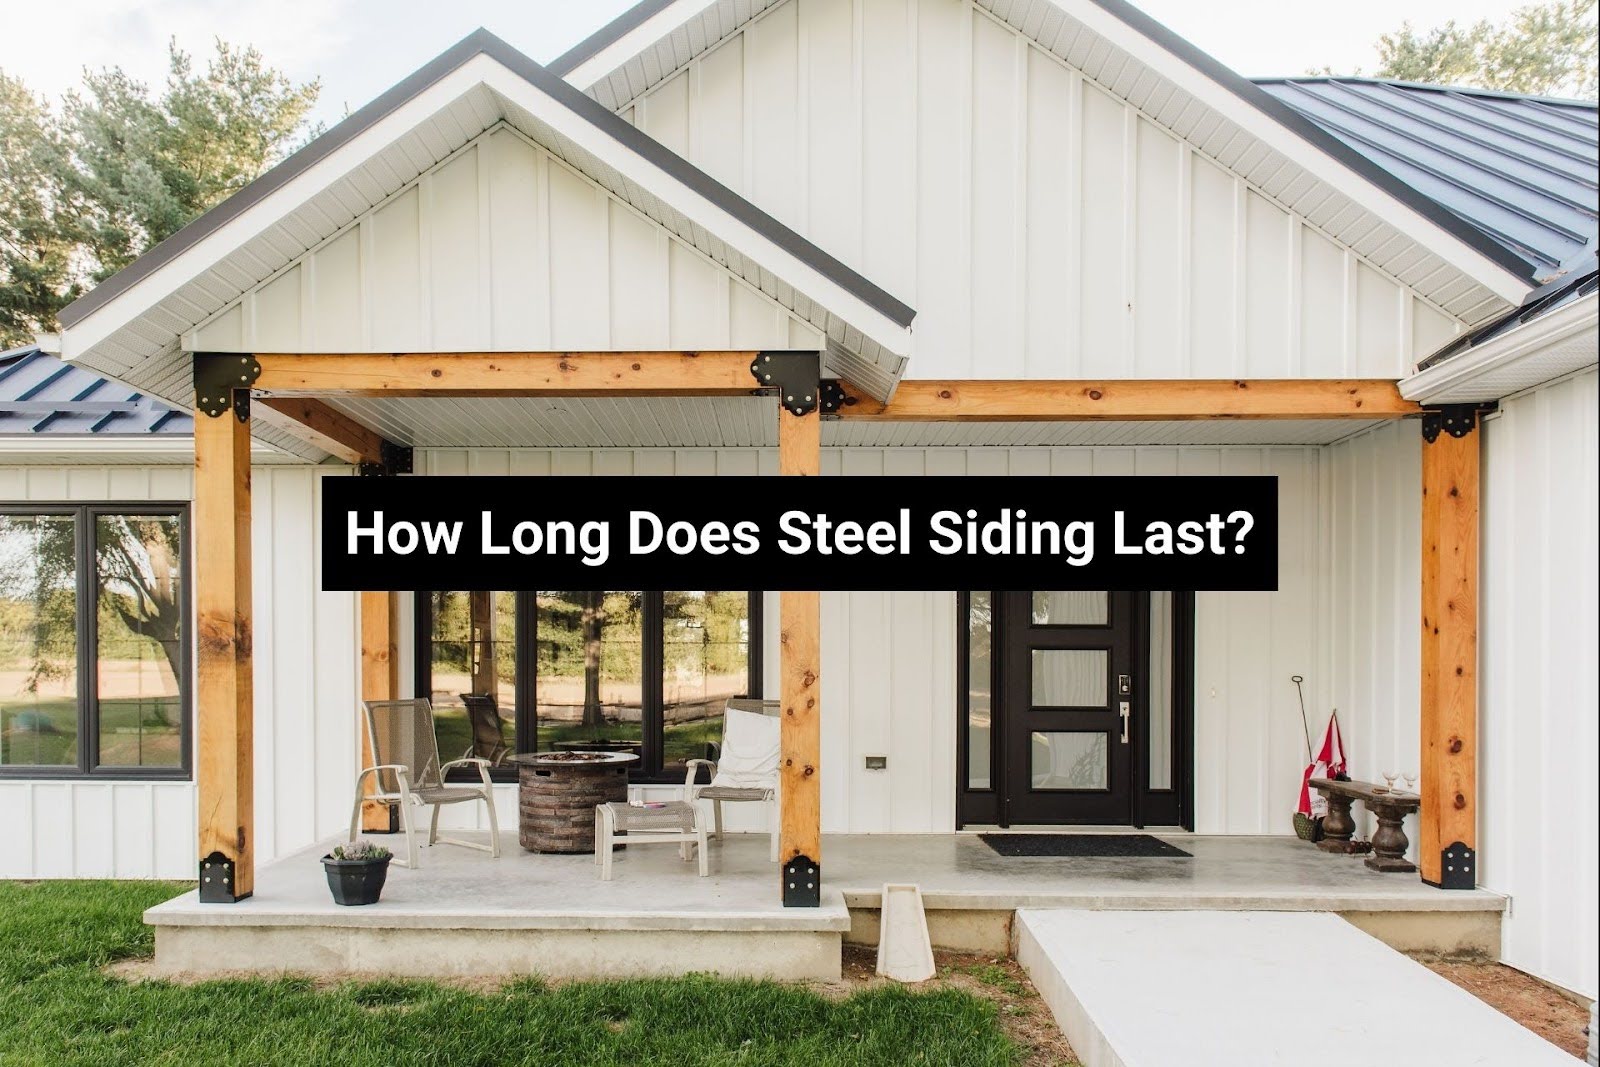 How long does steel siding last?